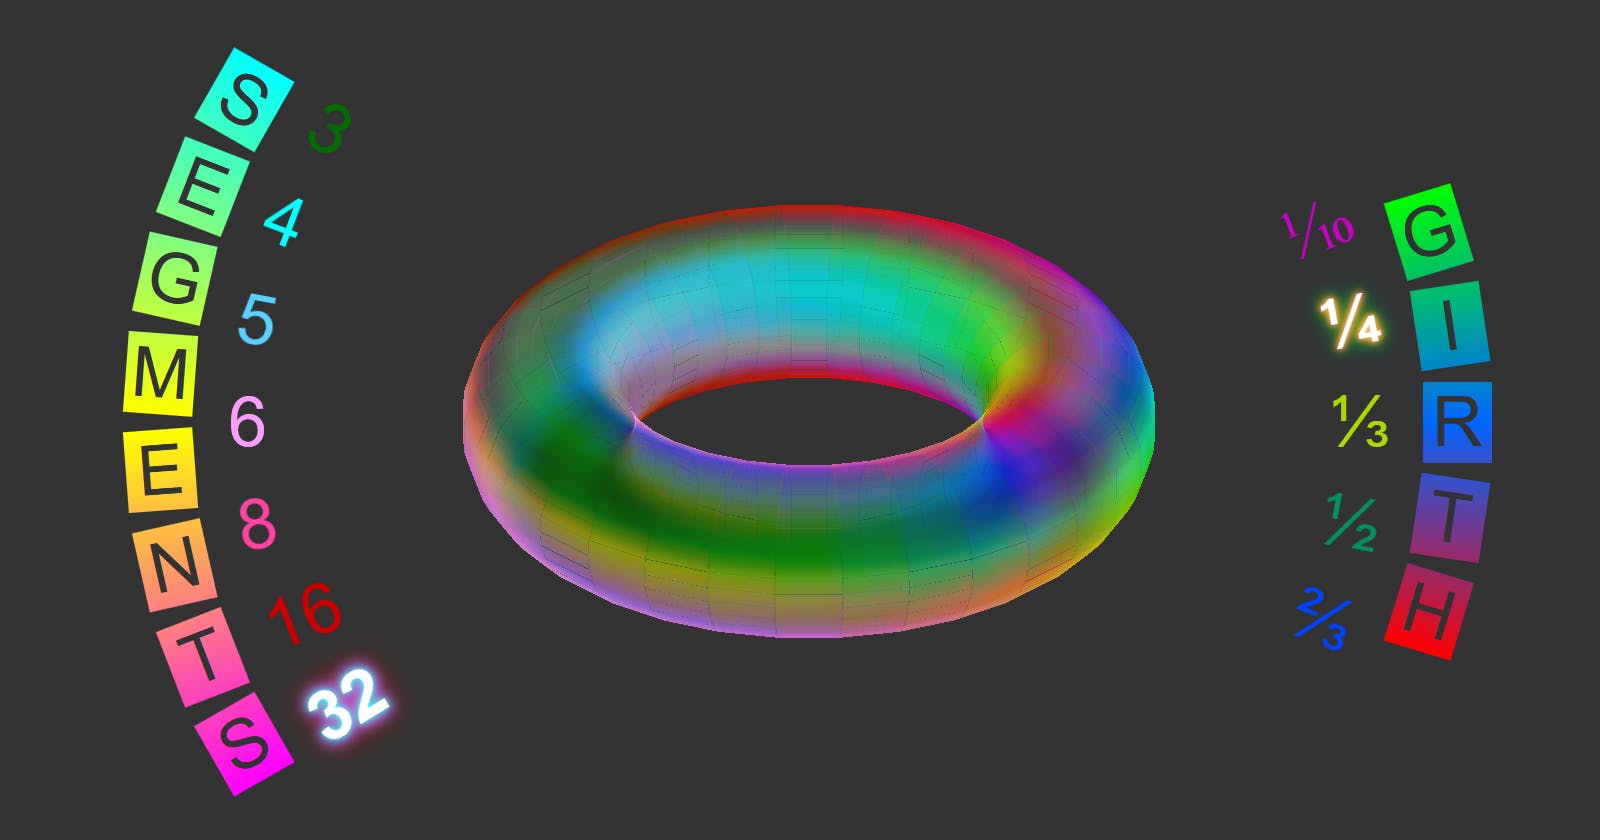 CSS 3D art: a 3D translucent rainbow-colored donut